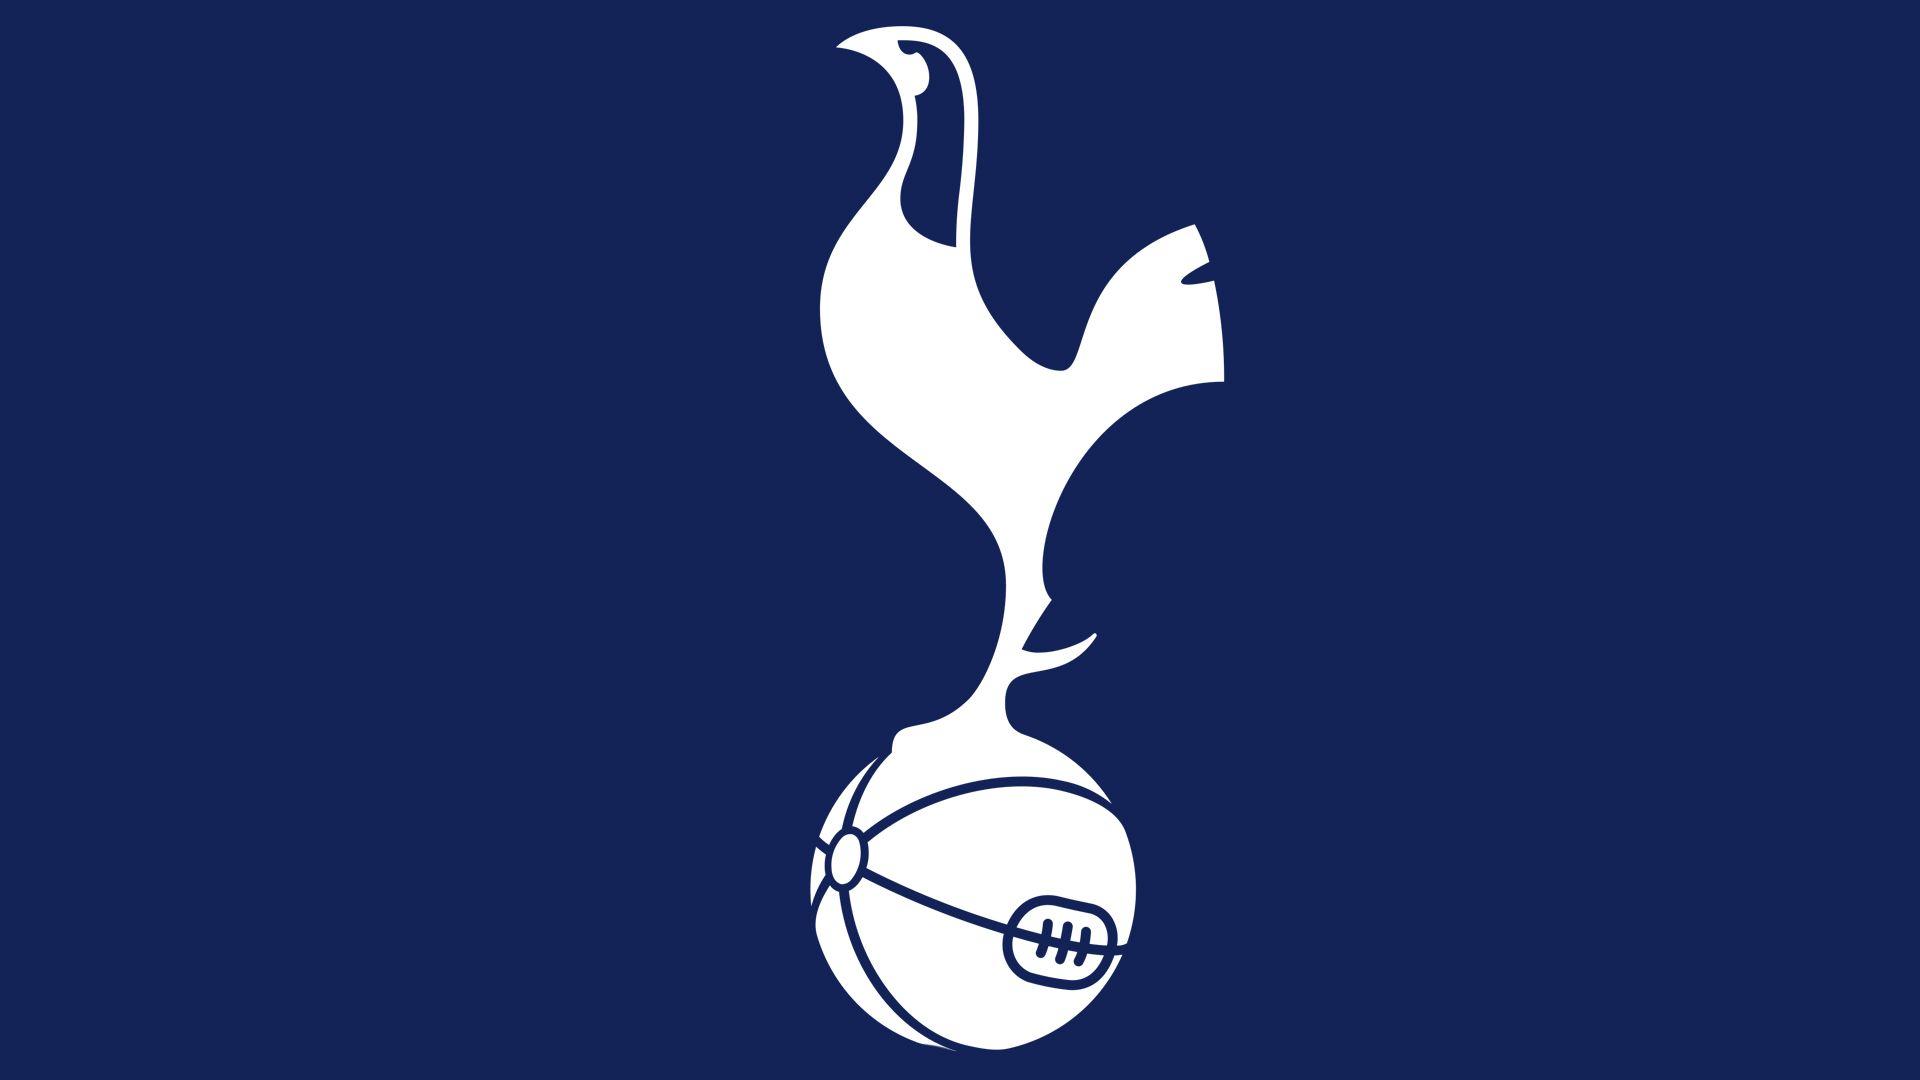 Tottenhsm Logo - Meaning Tottenham Hotspur logo and symbol. history and evolution